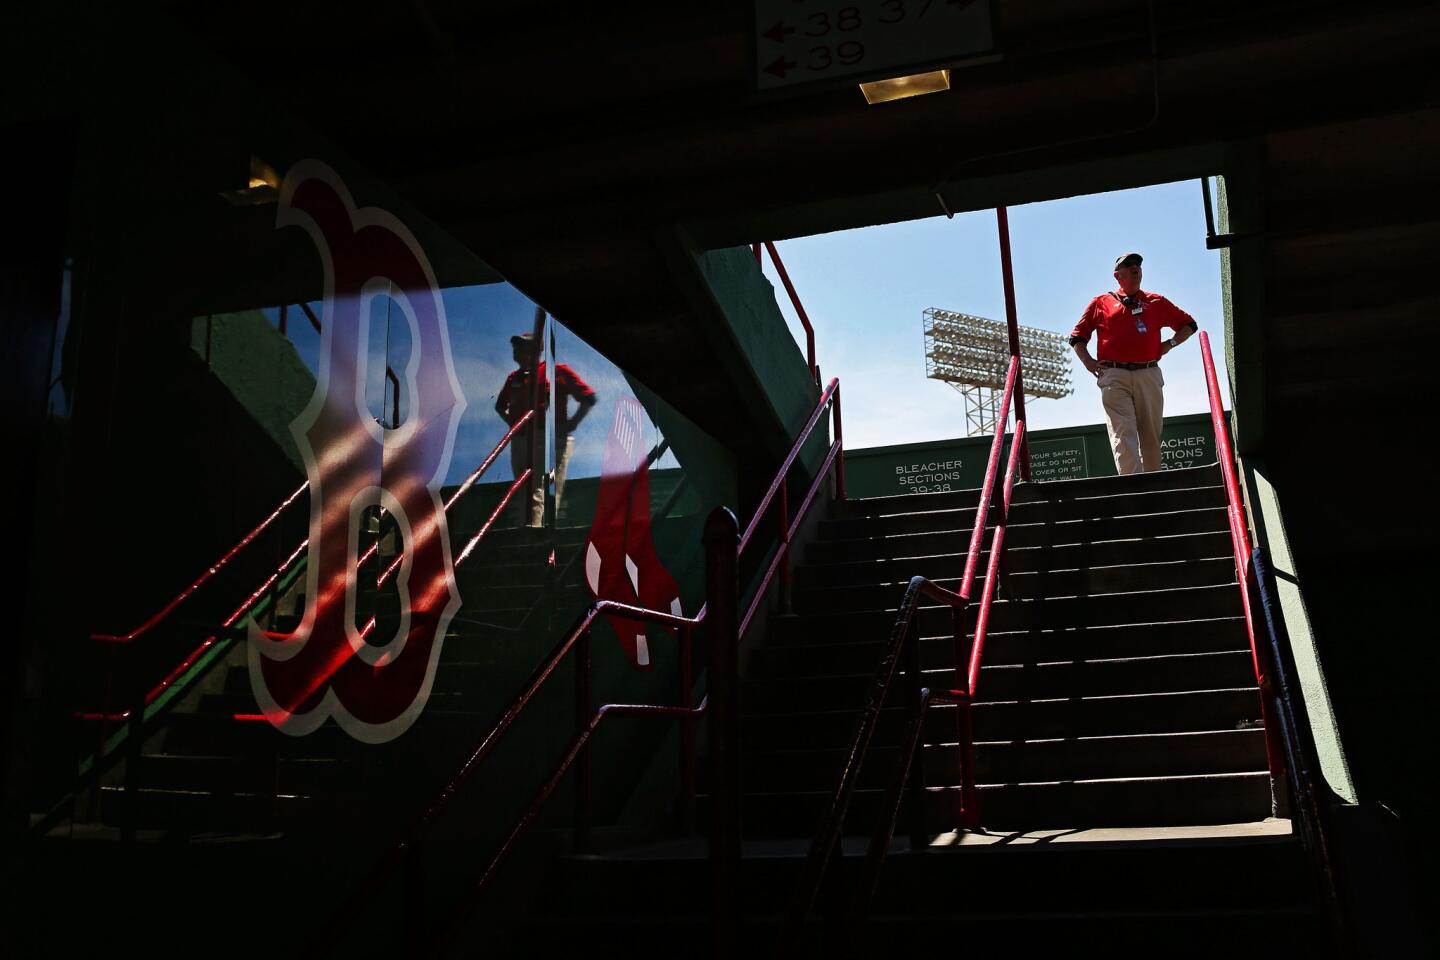 Fenway Park: Boston Red Sox